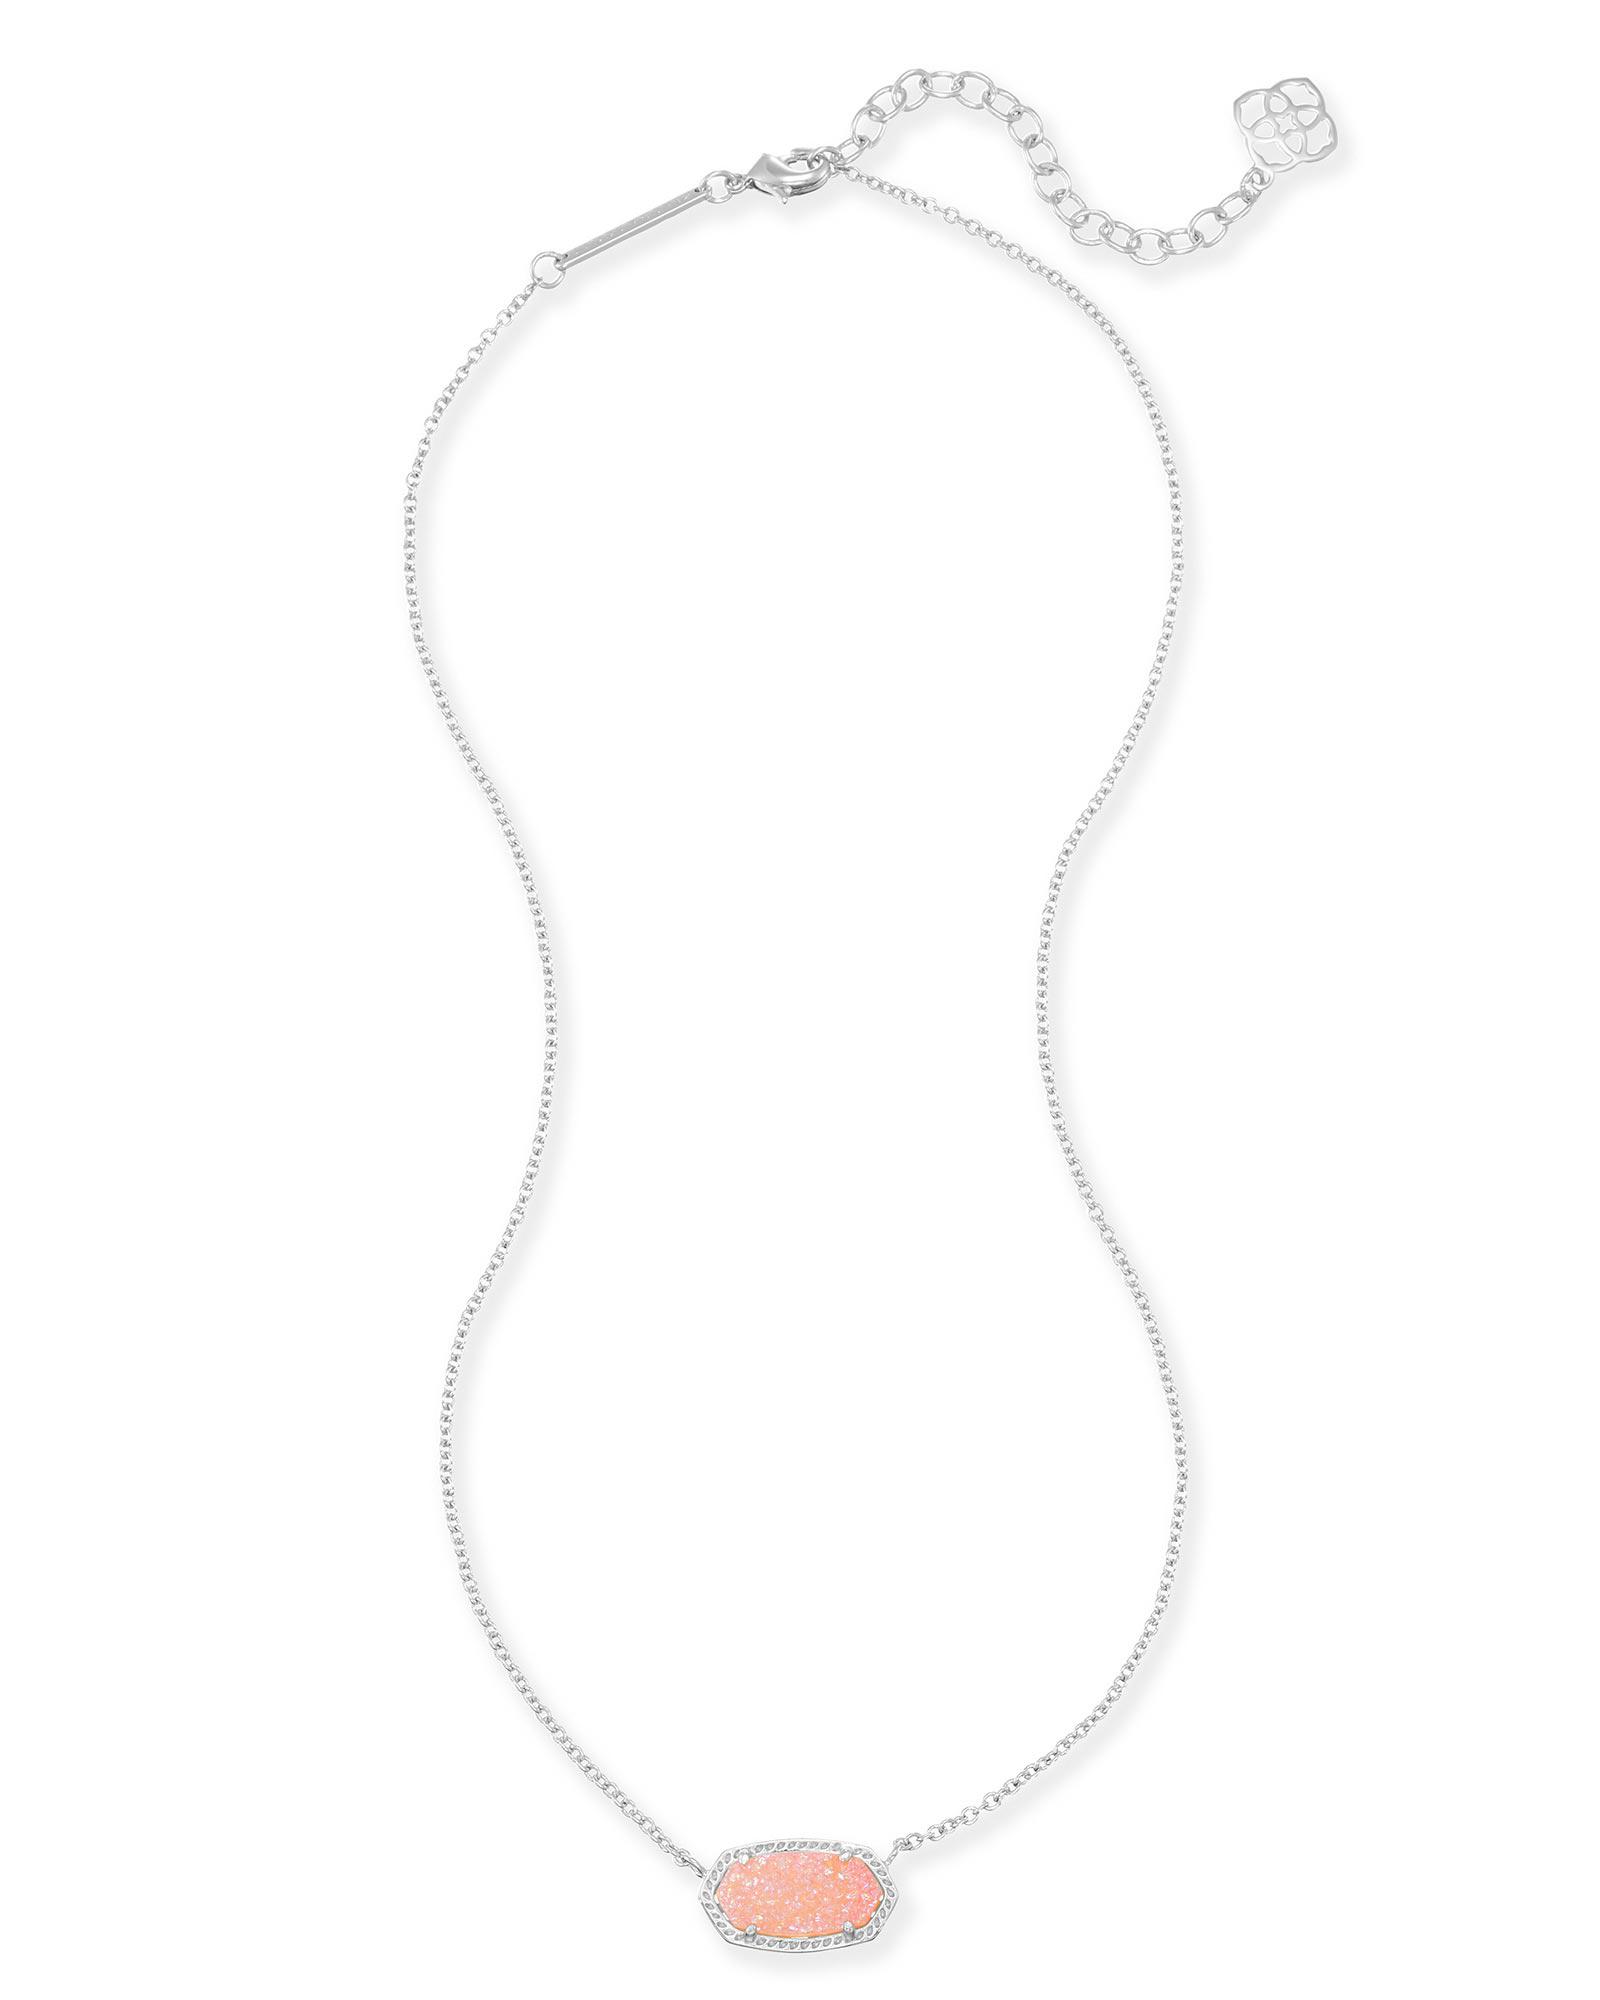 Kendra Scott Elisa Oval Pendant Necklace in Iridescent Drusy and Rhodium |  eBay